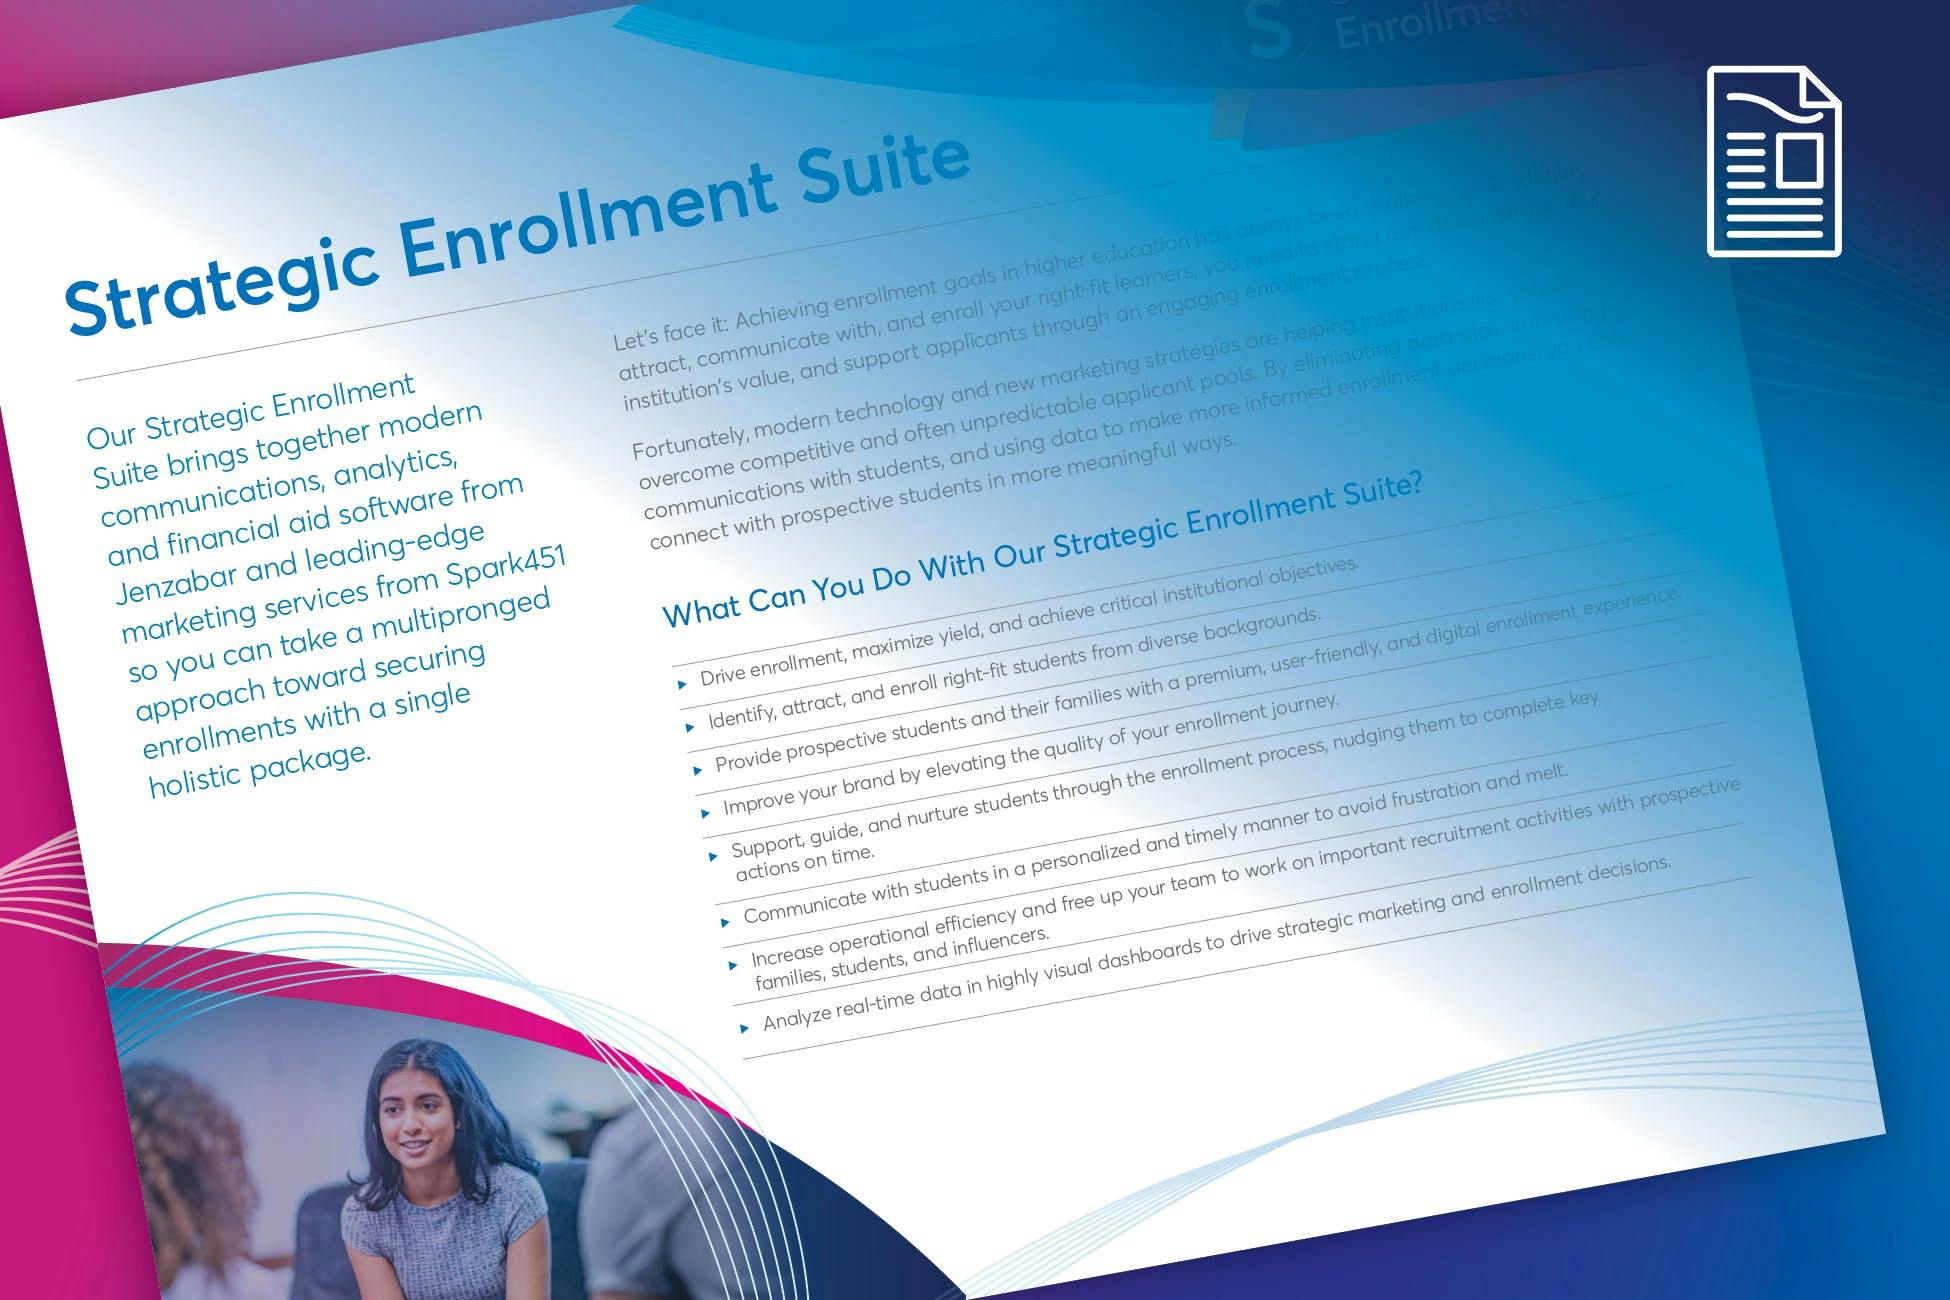 Solution Sheet: Strategic Enrollment Suite